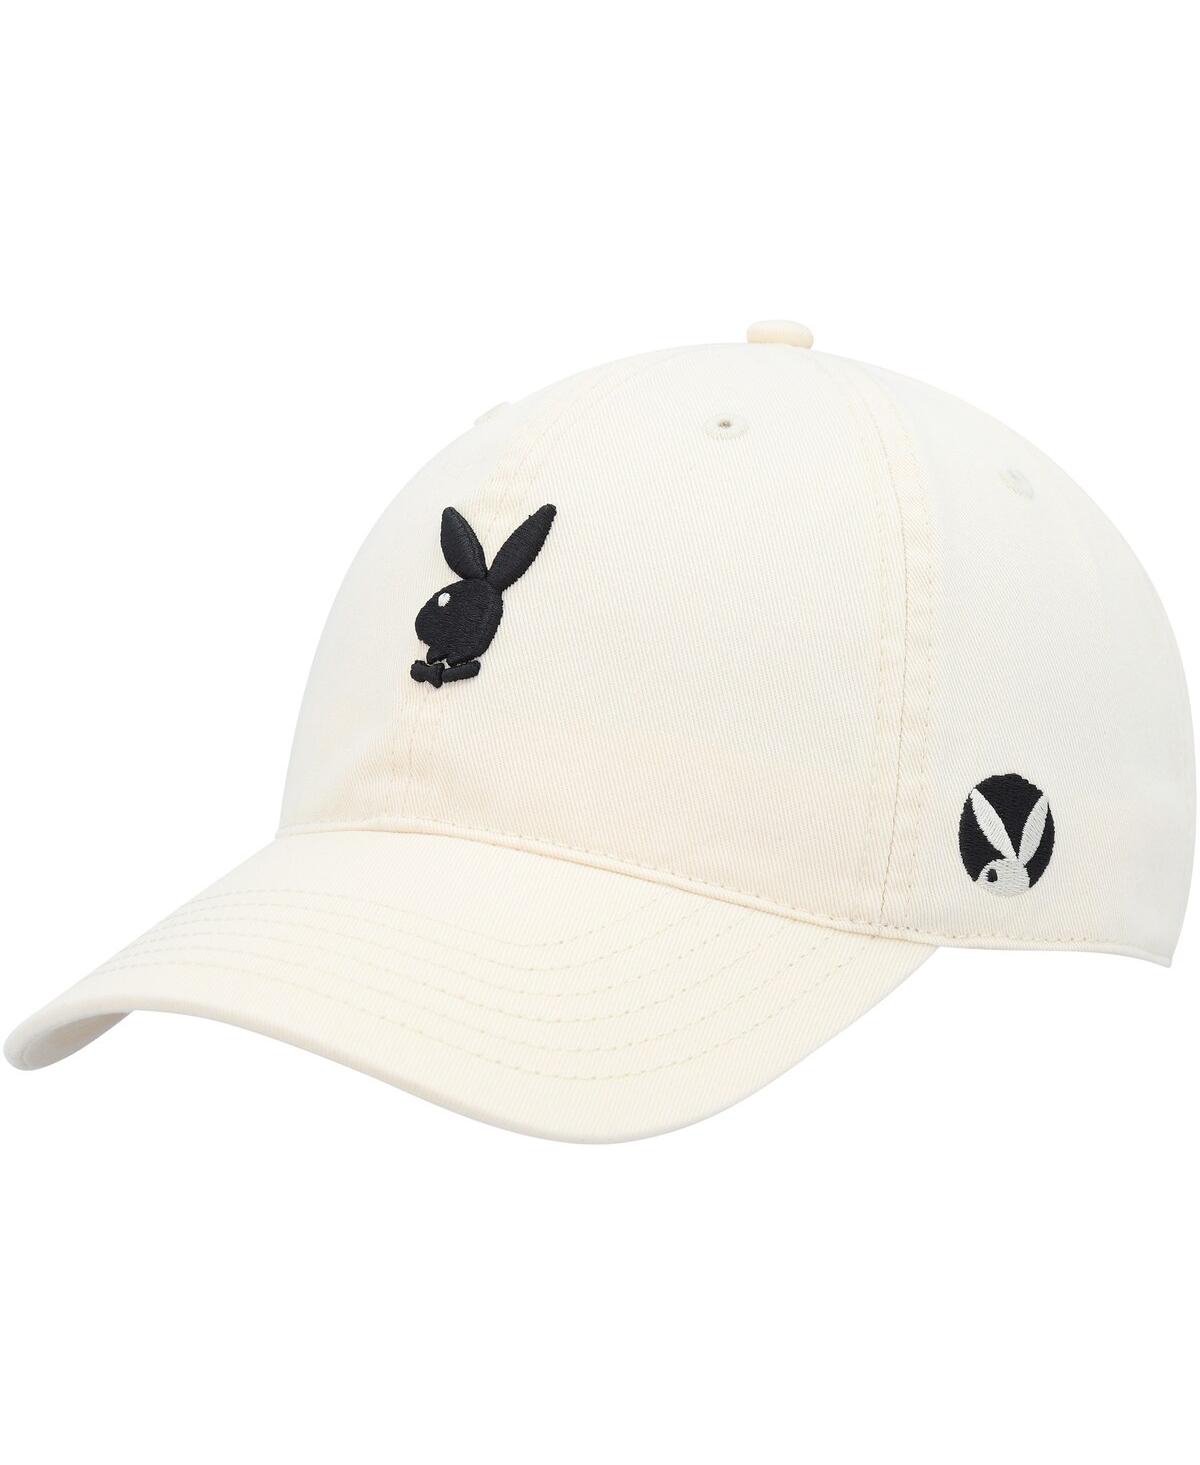 Men's Playboy Cream Micro Dad Adjustable Hat - Cream